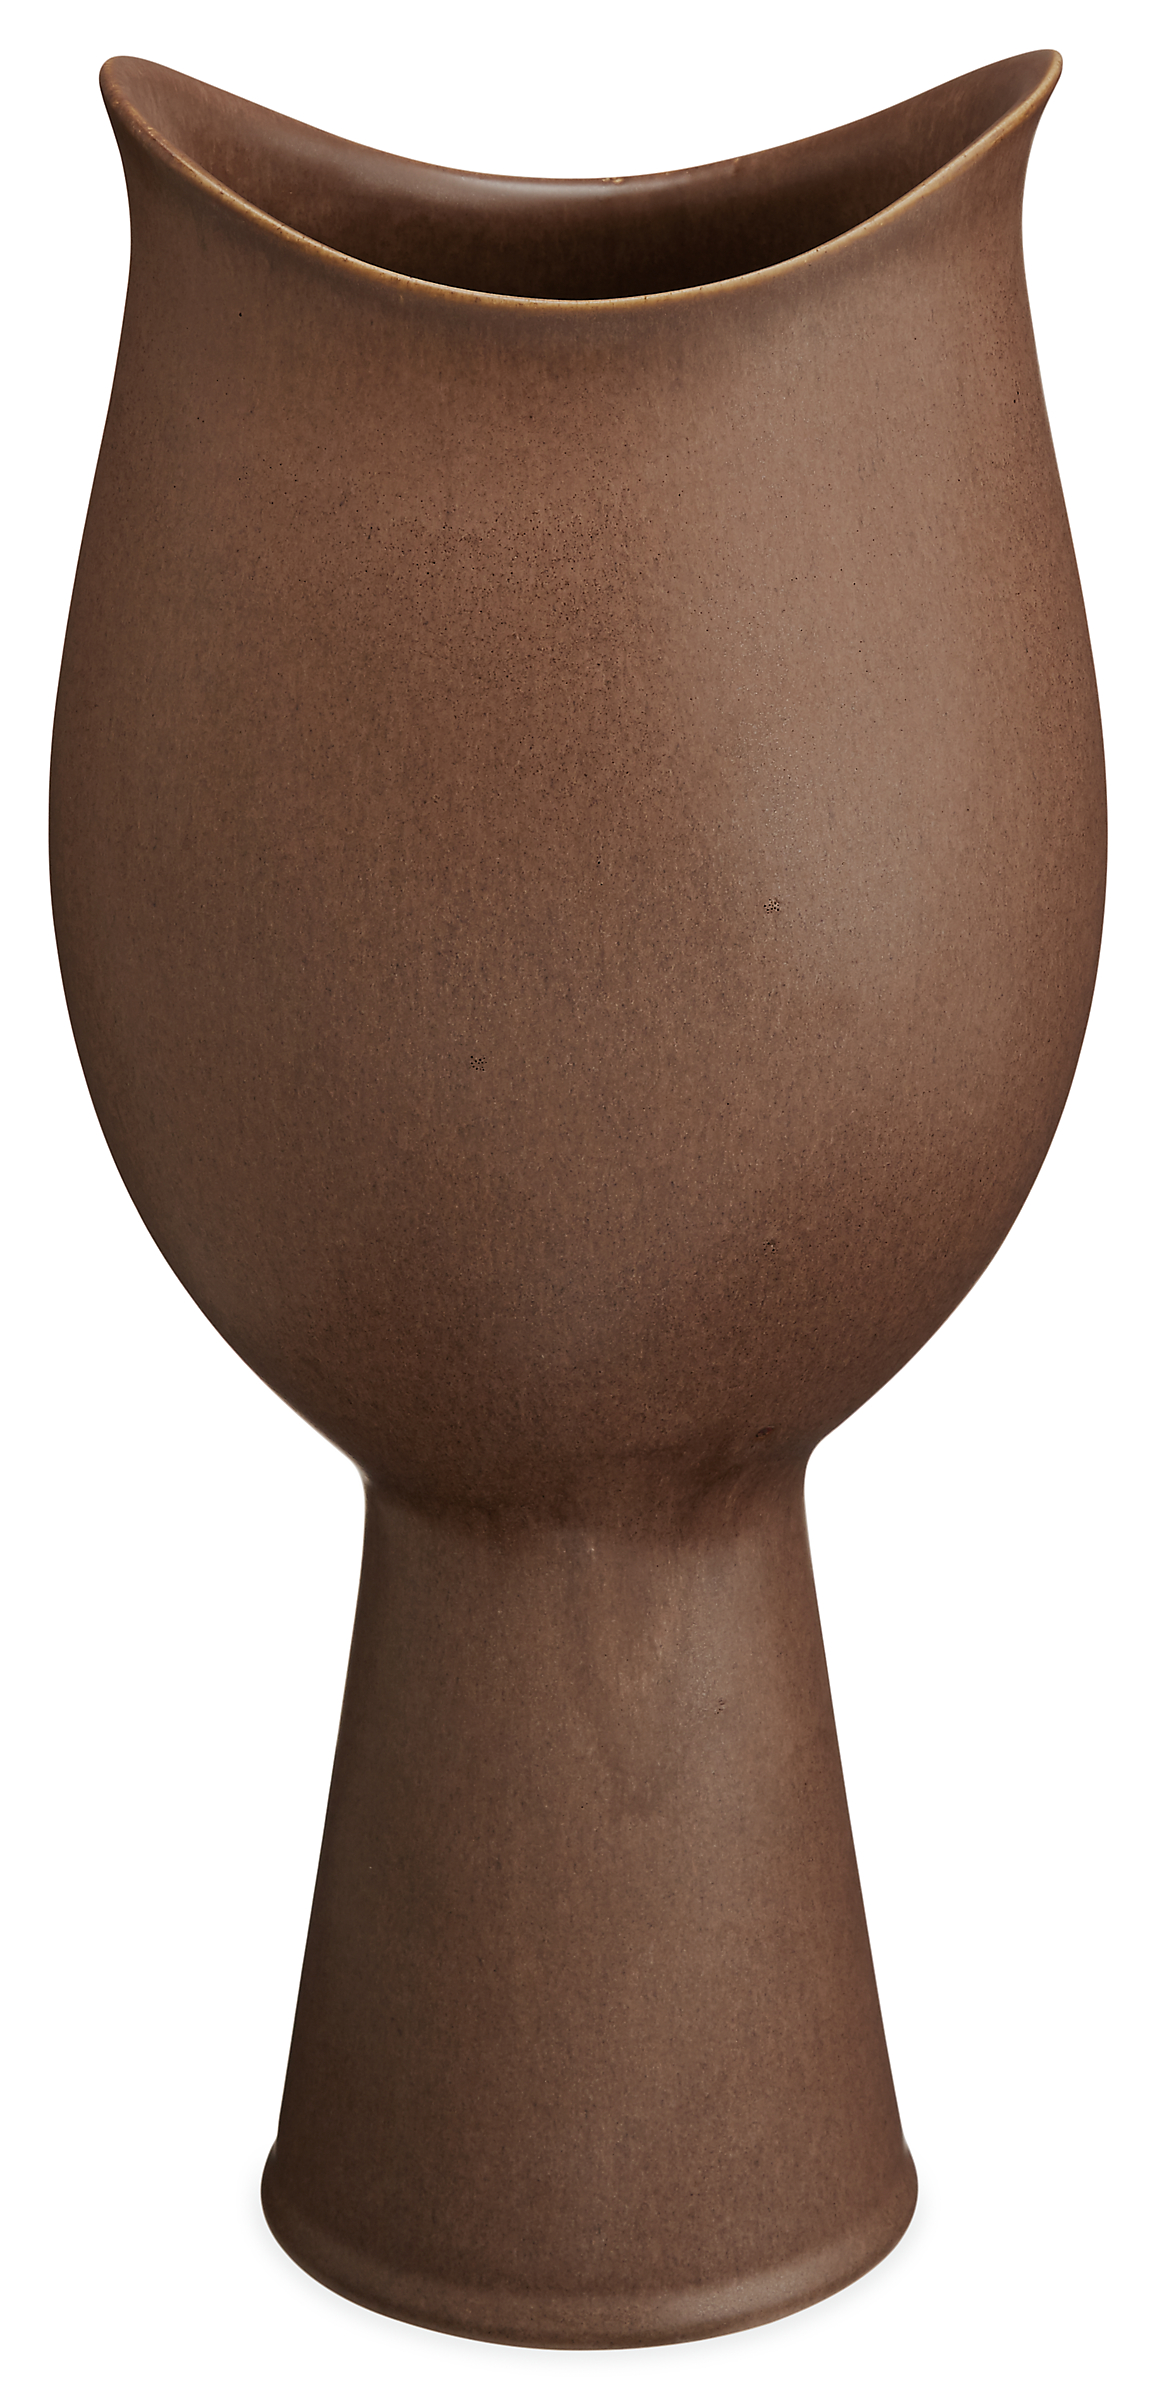 Althea Large Vase